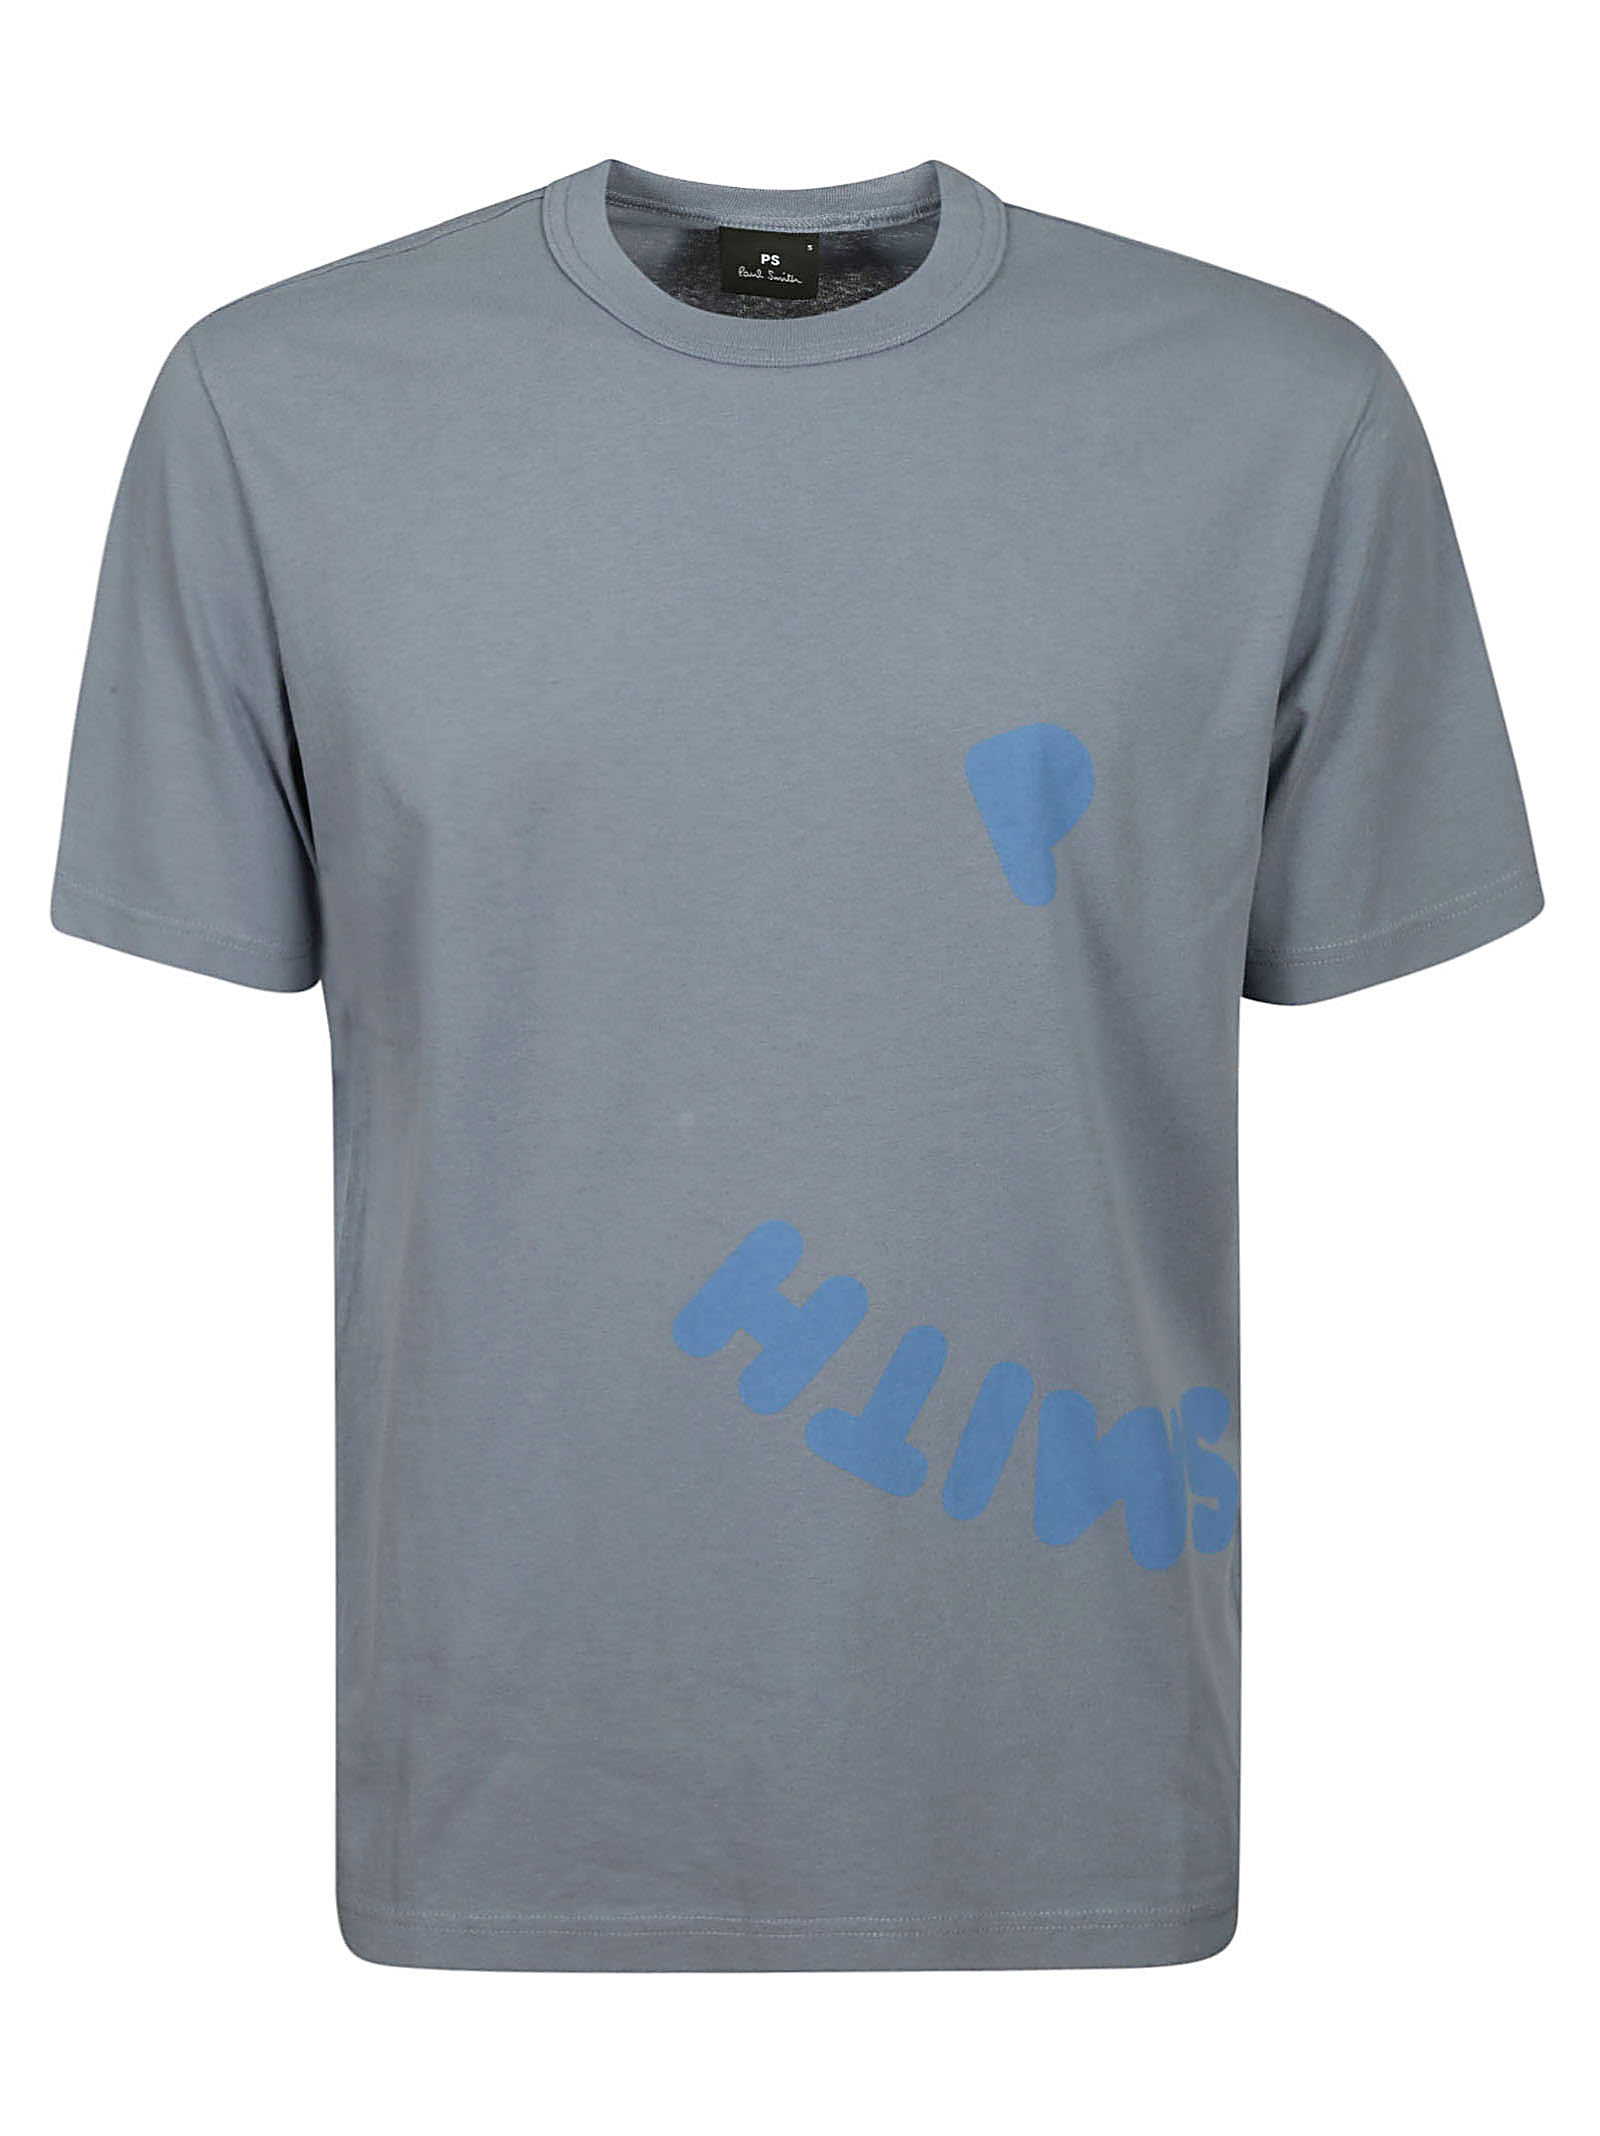 Paul Smith Ss Tshirts Ps Happy Print In A Greyish Blue